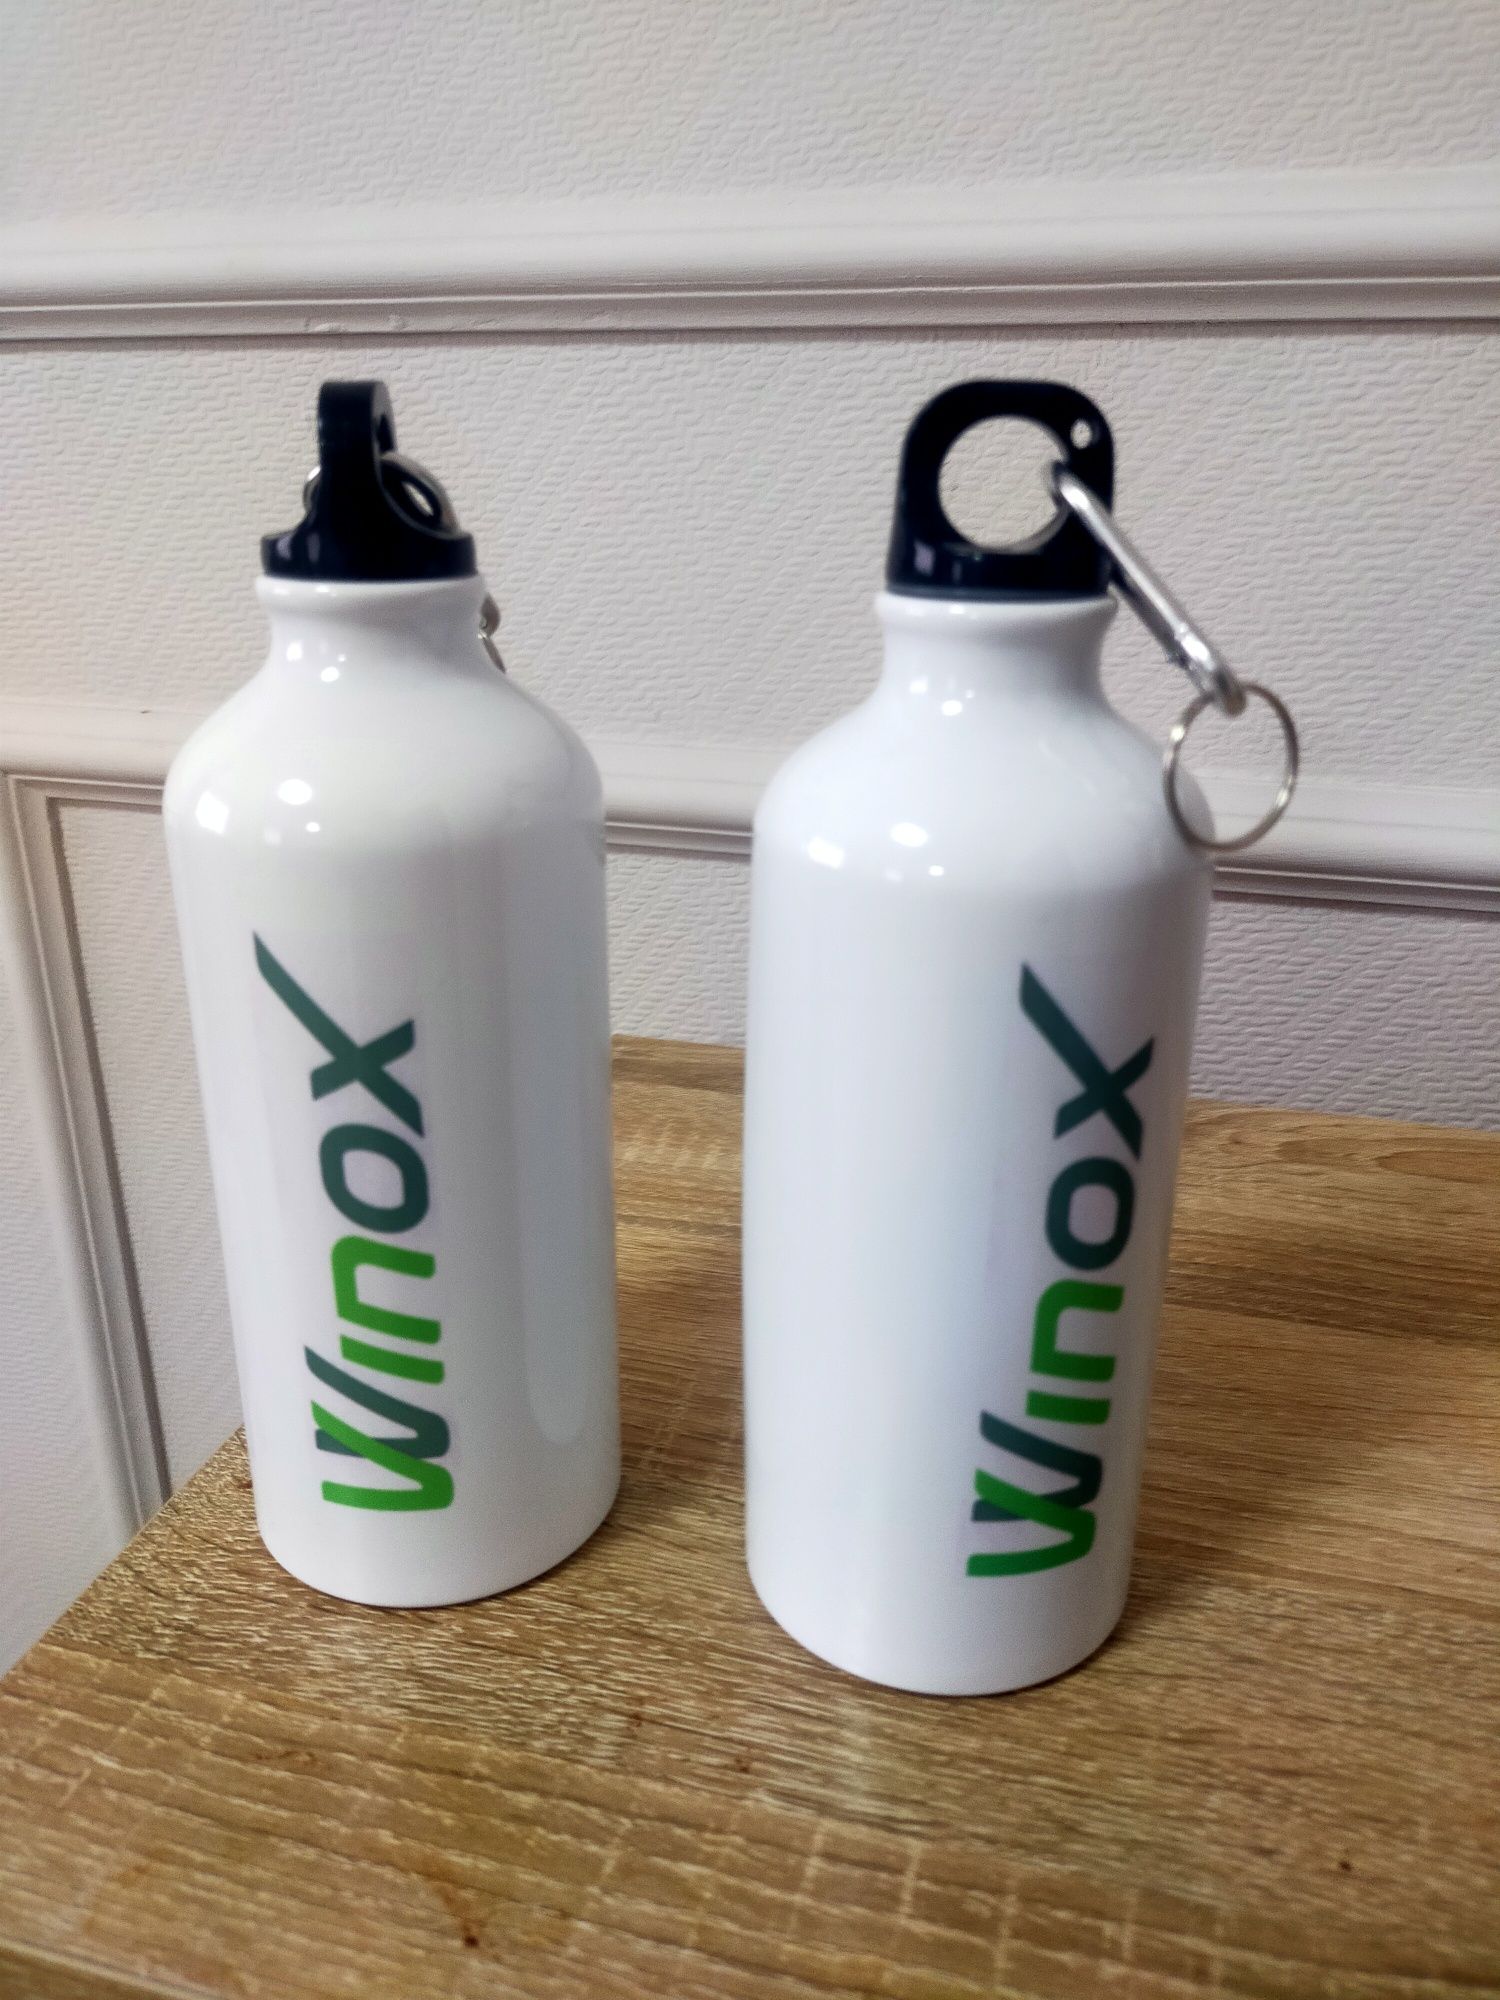 Срочно продам бутыли Winox для жидкости.